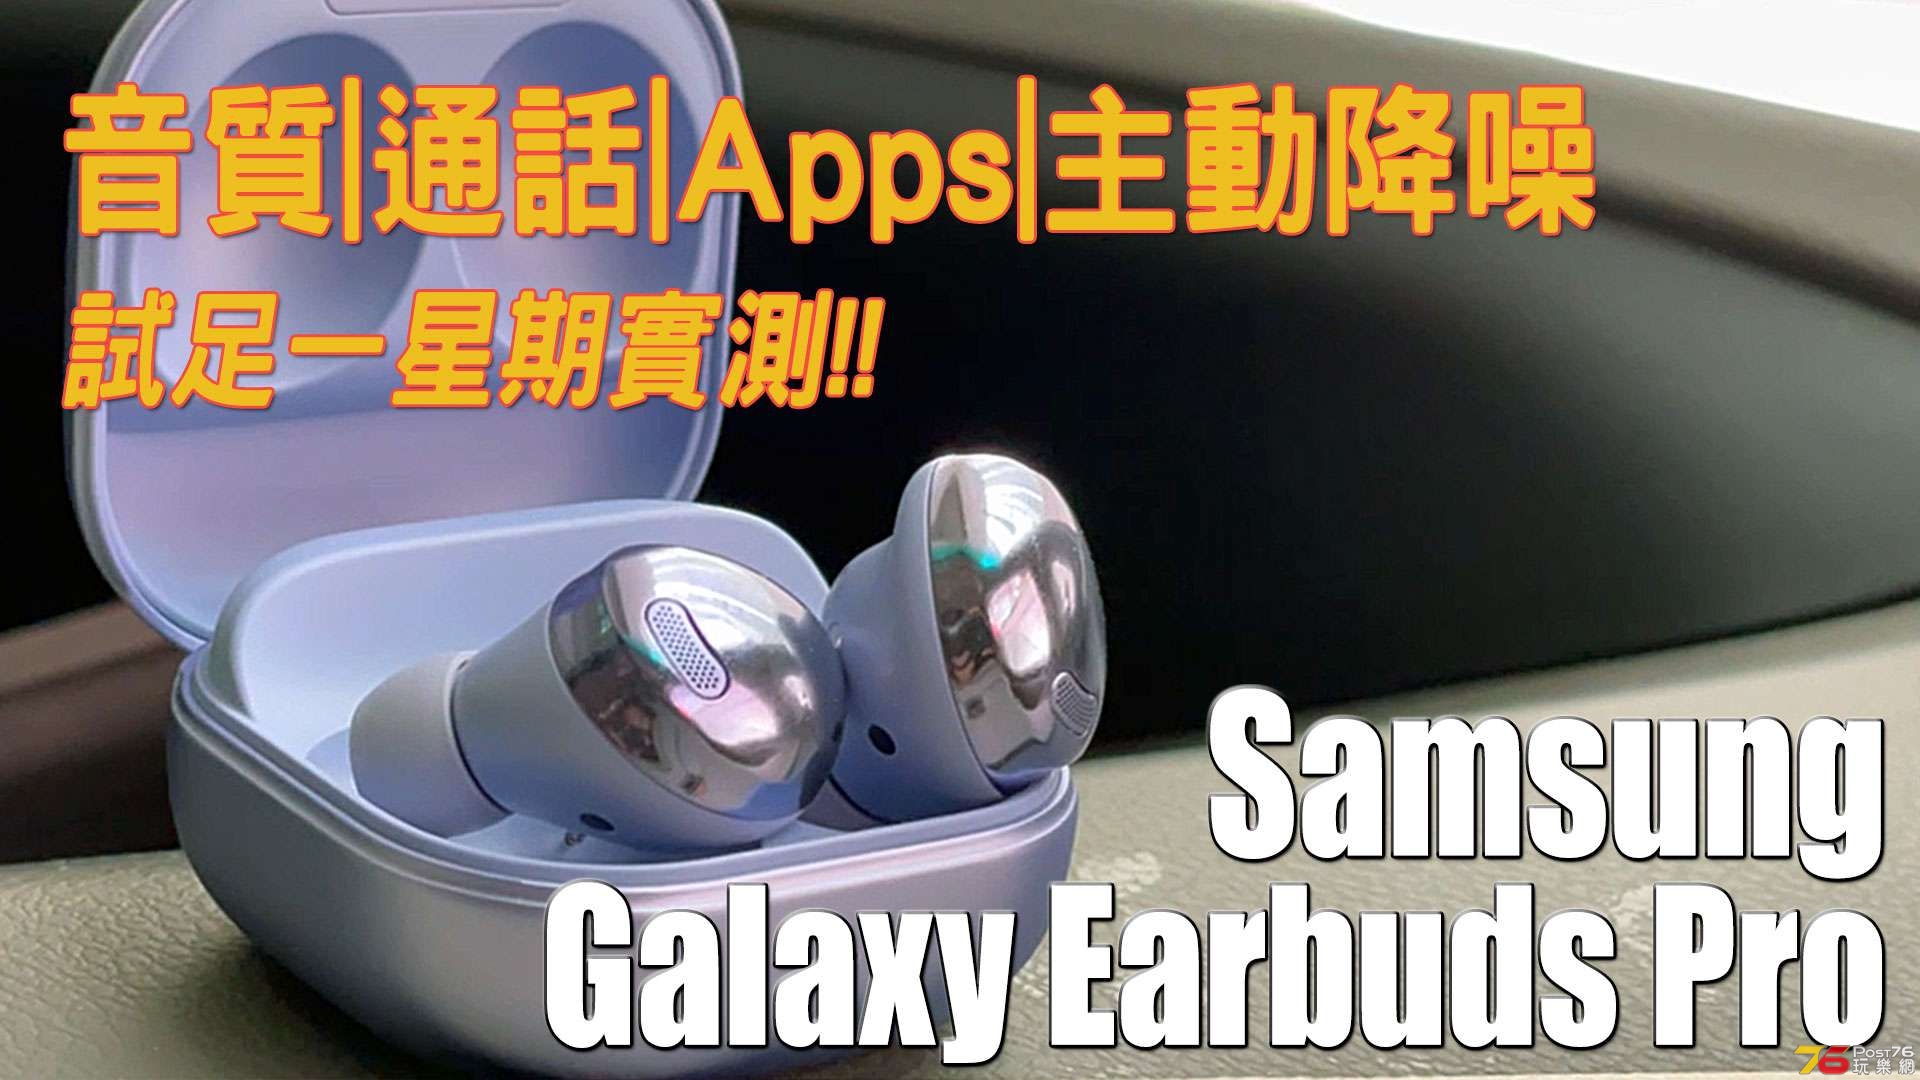 Samsung-Galaxy-Earbuds-Pro-review-forum.jpg